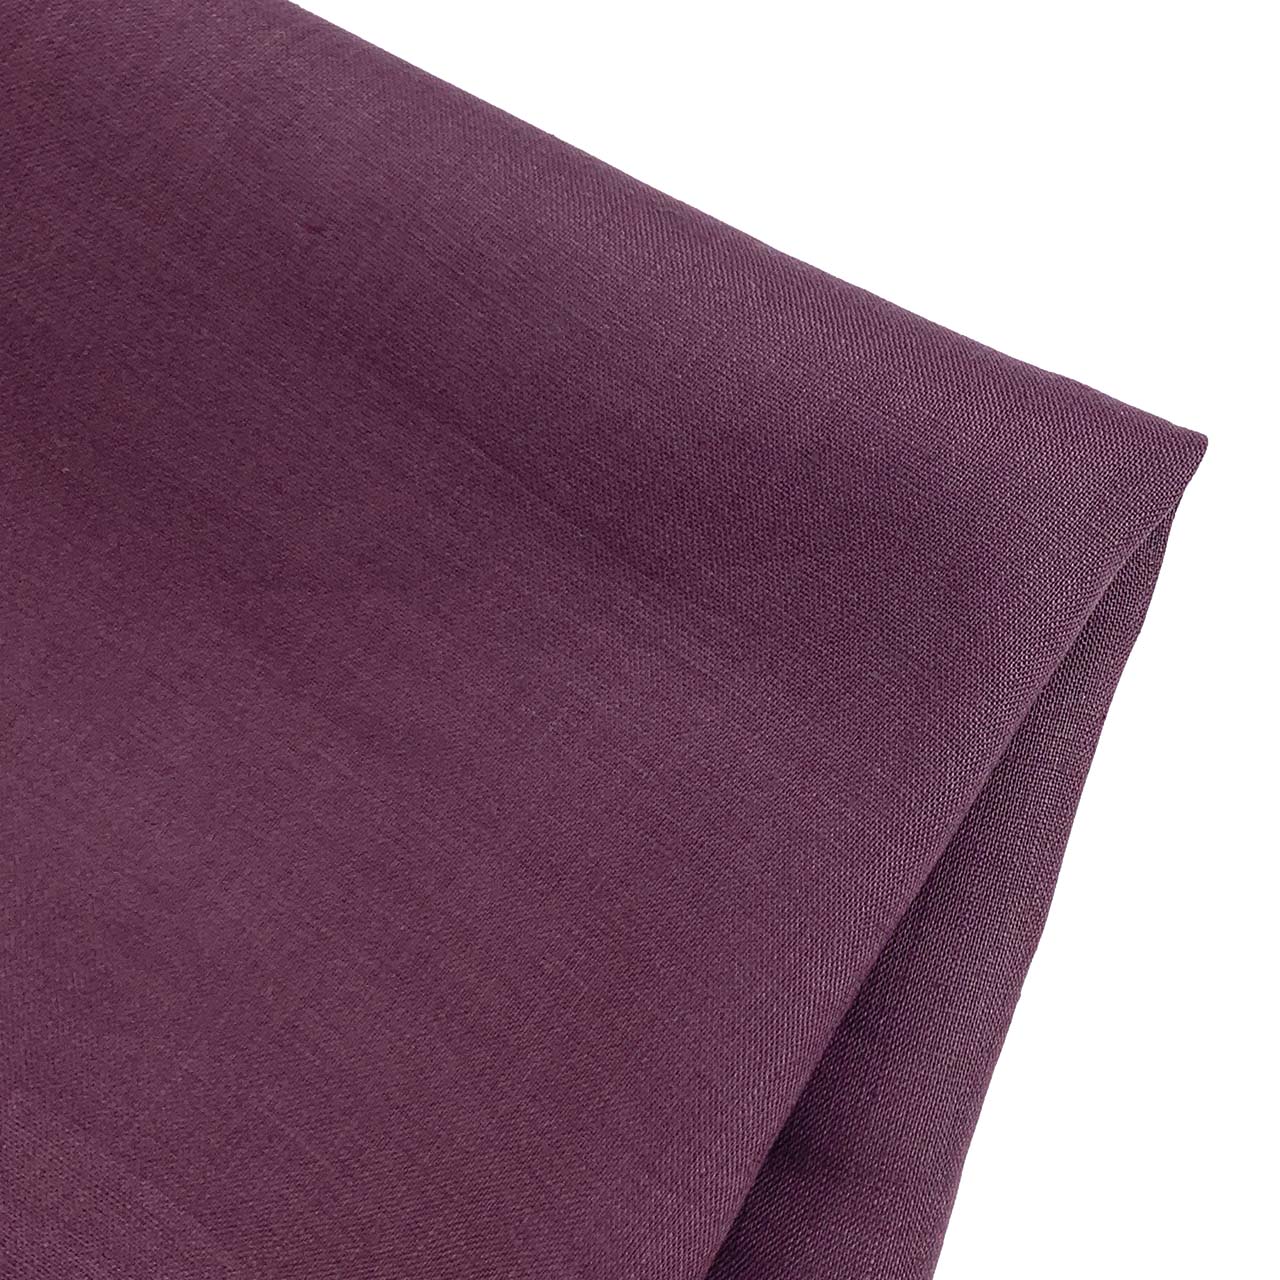 eggplant linen fabric eggplant purple linen material - Fabric Collection